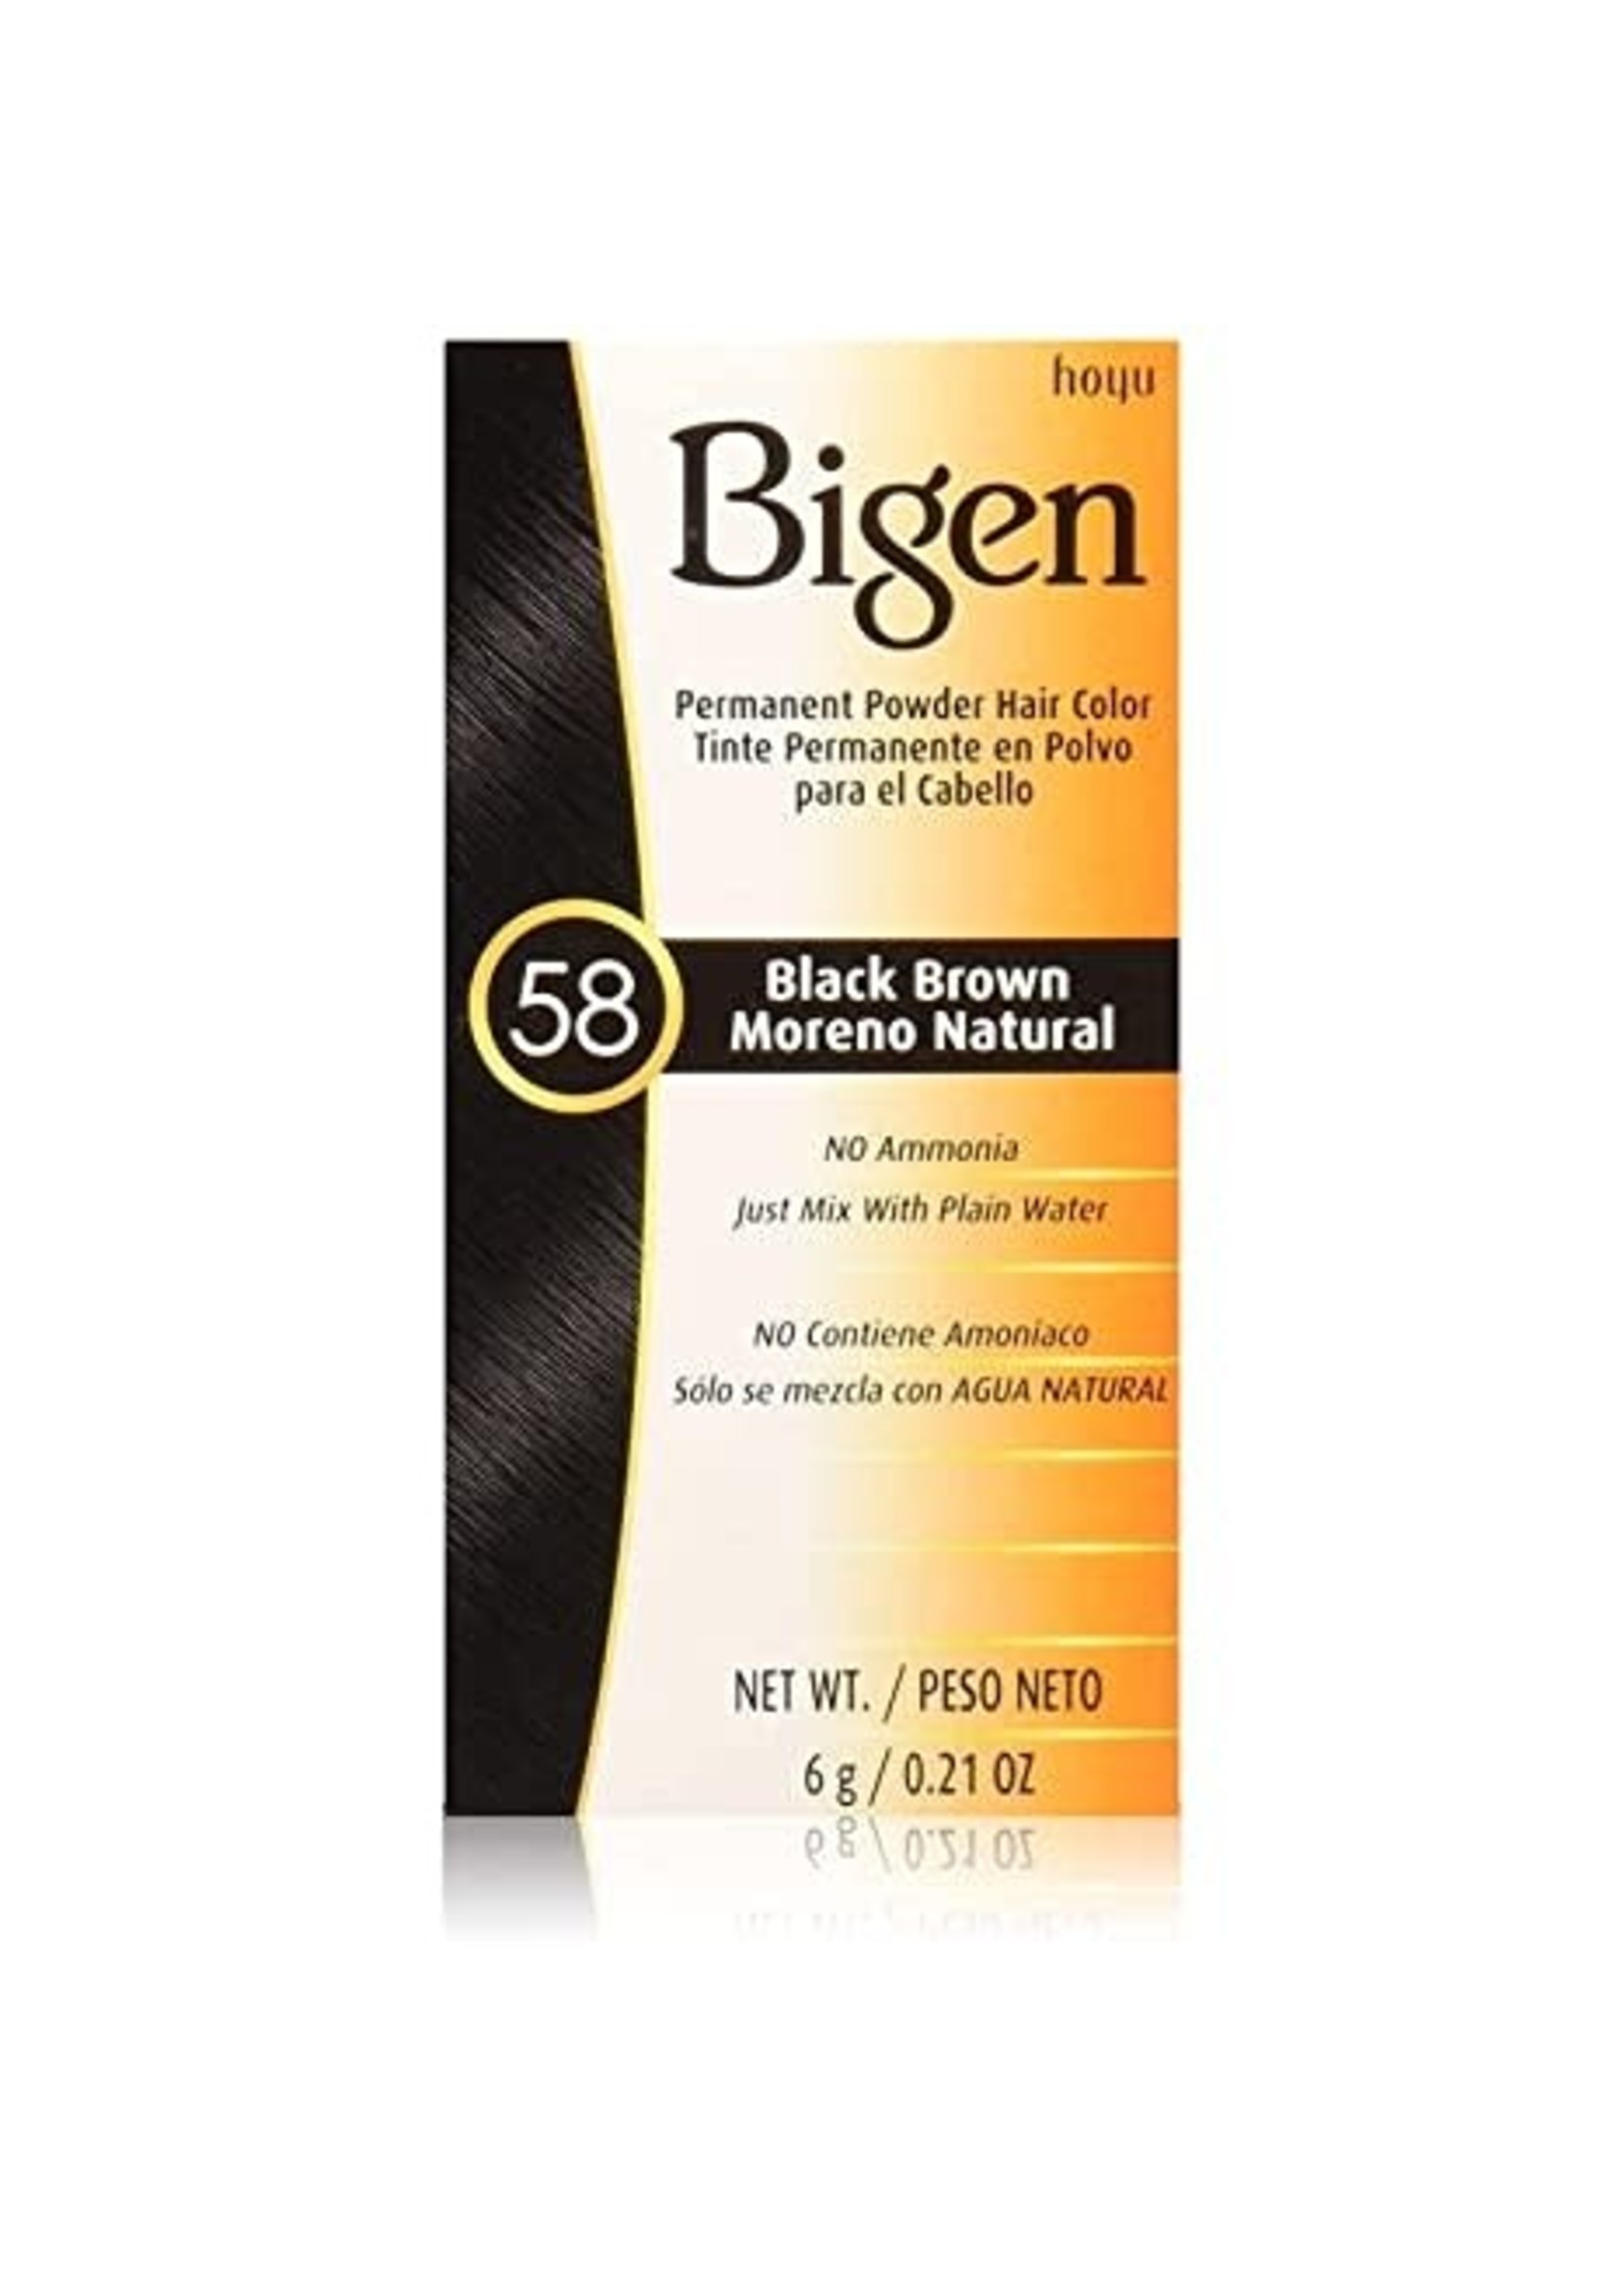 Bigen Hair Color #58 Black Brown .21 oz